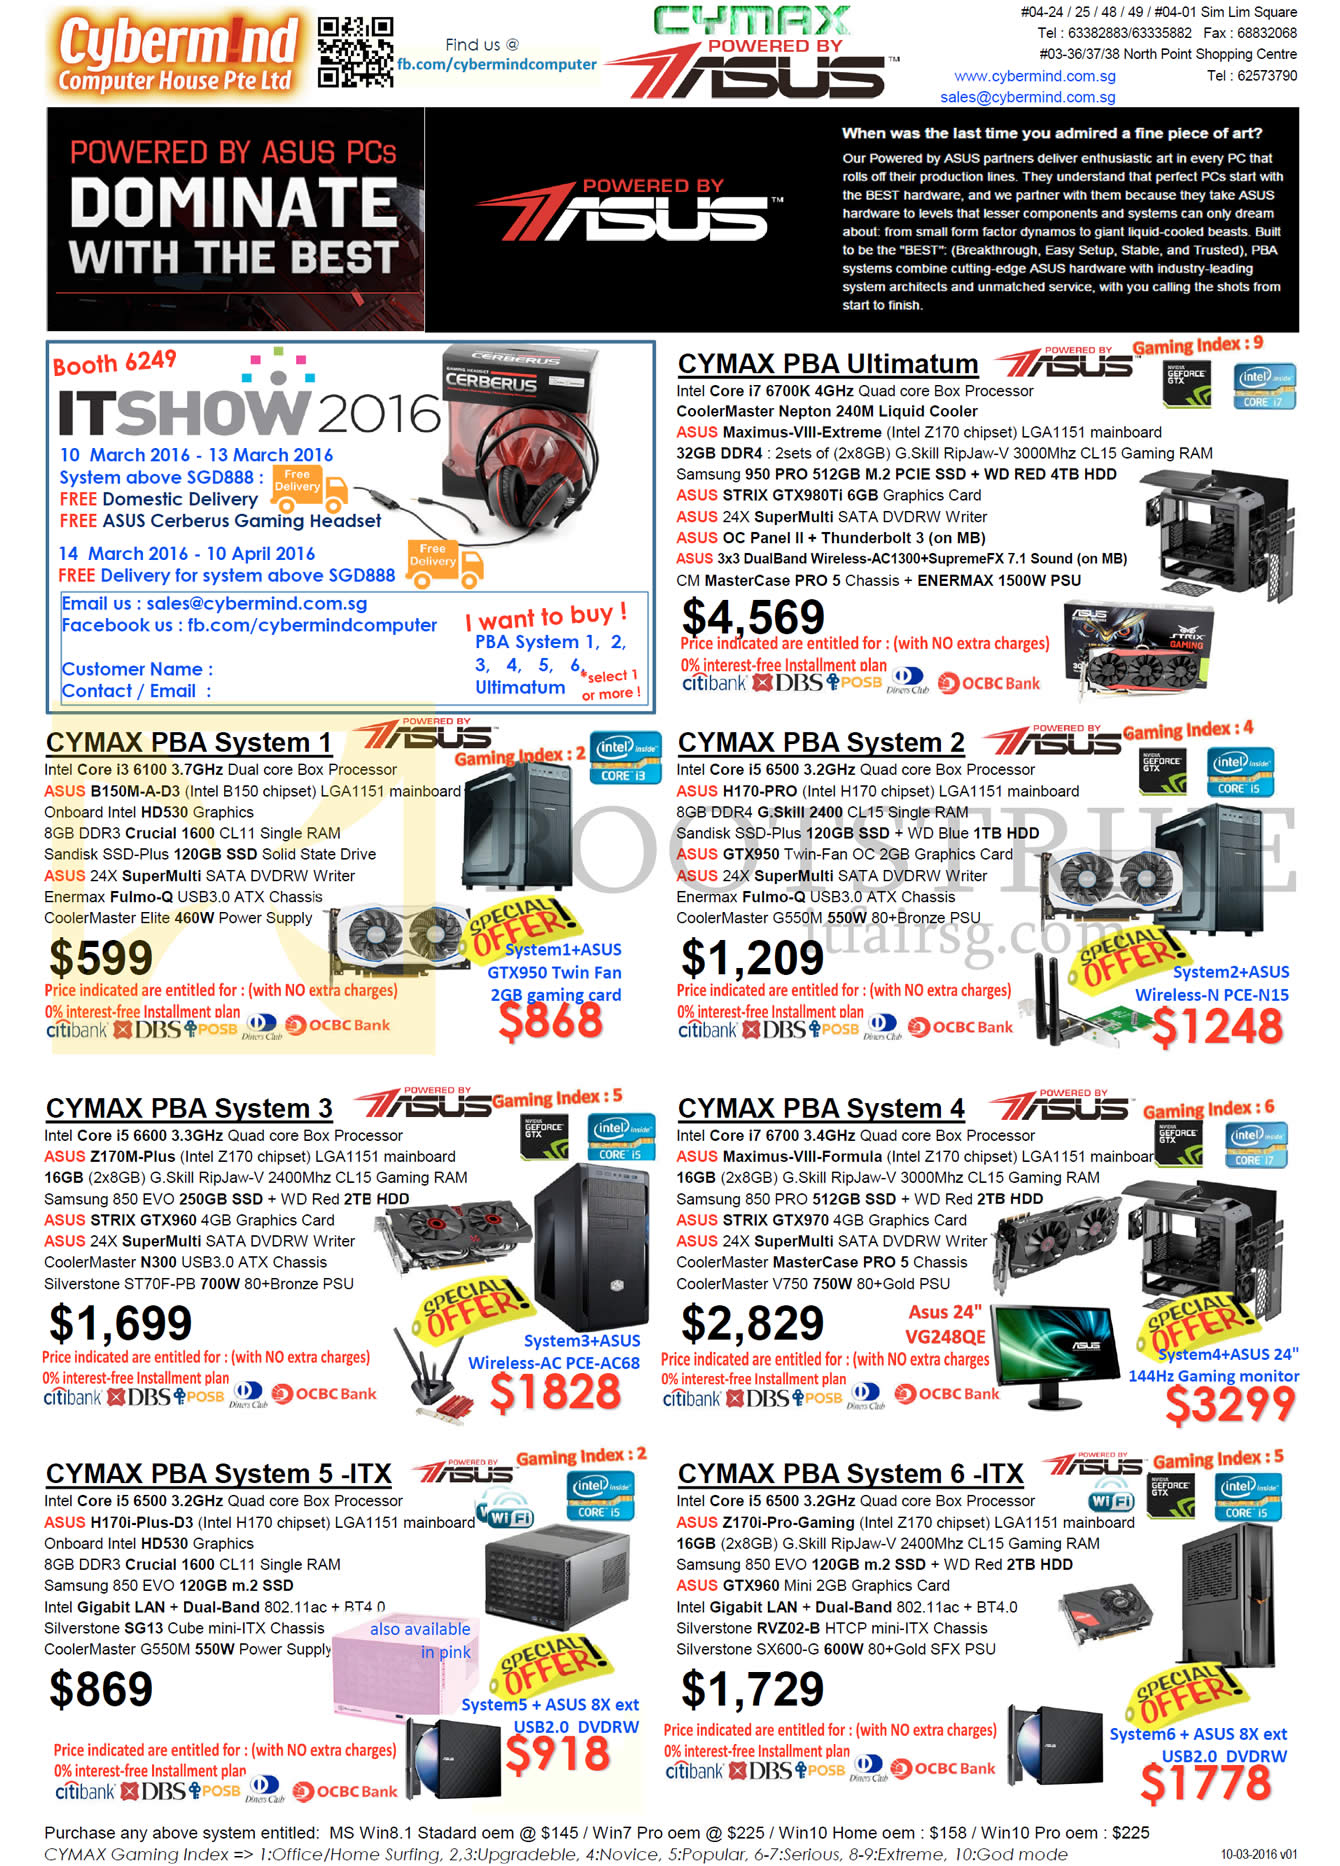 IT SHOW 2016 price list image brochure of Cybermind Desktop PCs Quad Core Processors Cymax PBA System 1, 3, 5-ITX, 2, Ultimatum, 4, 6-ITX